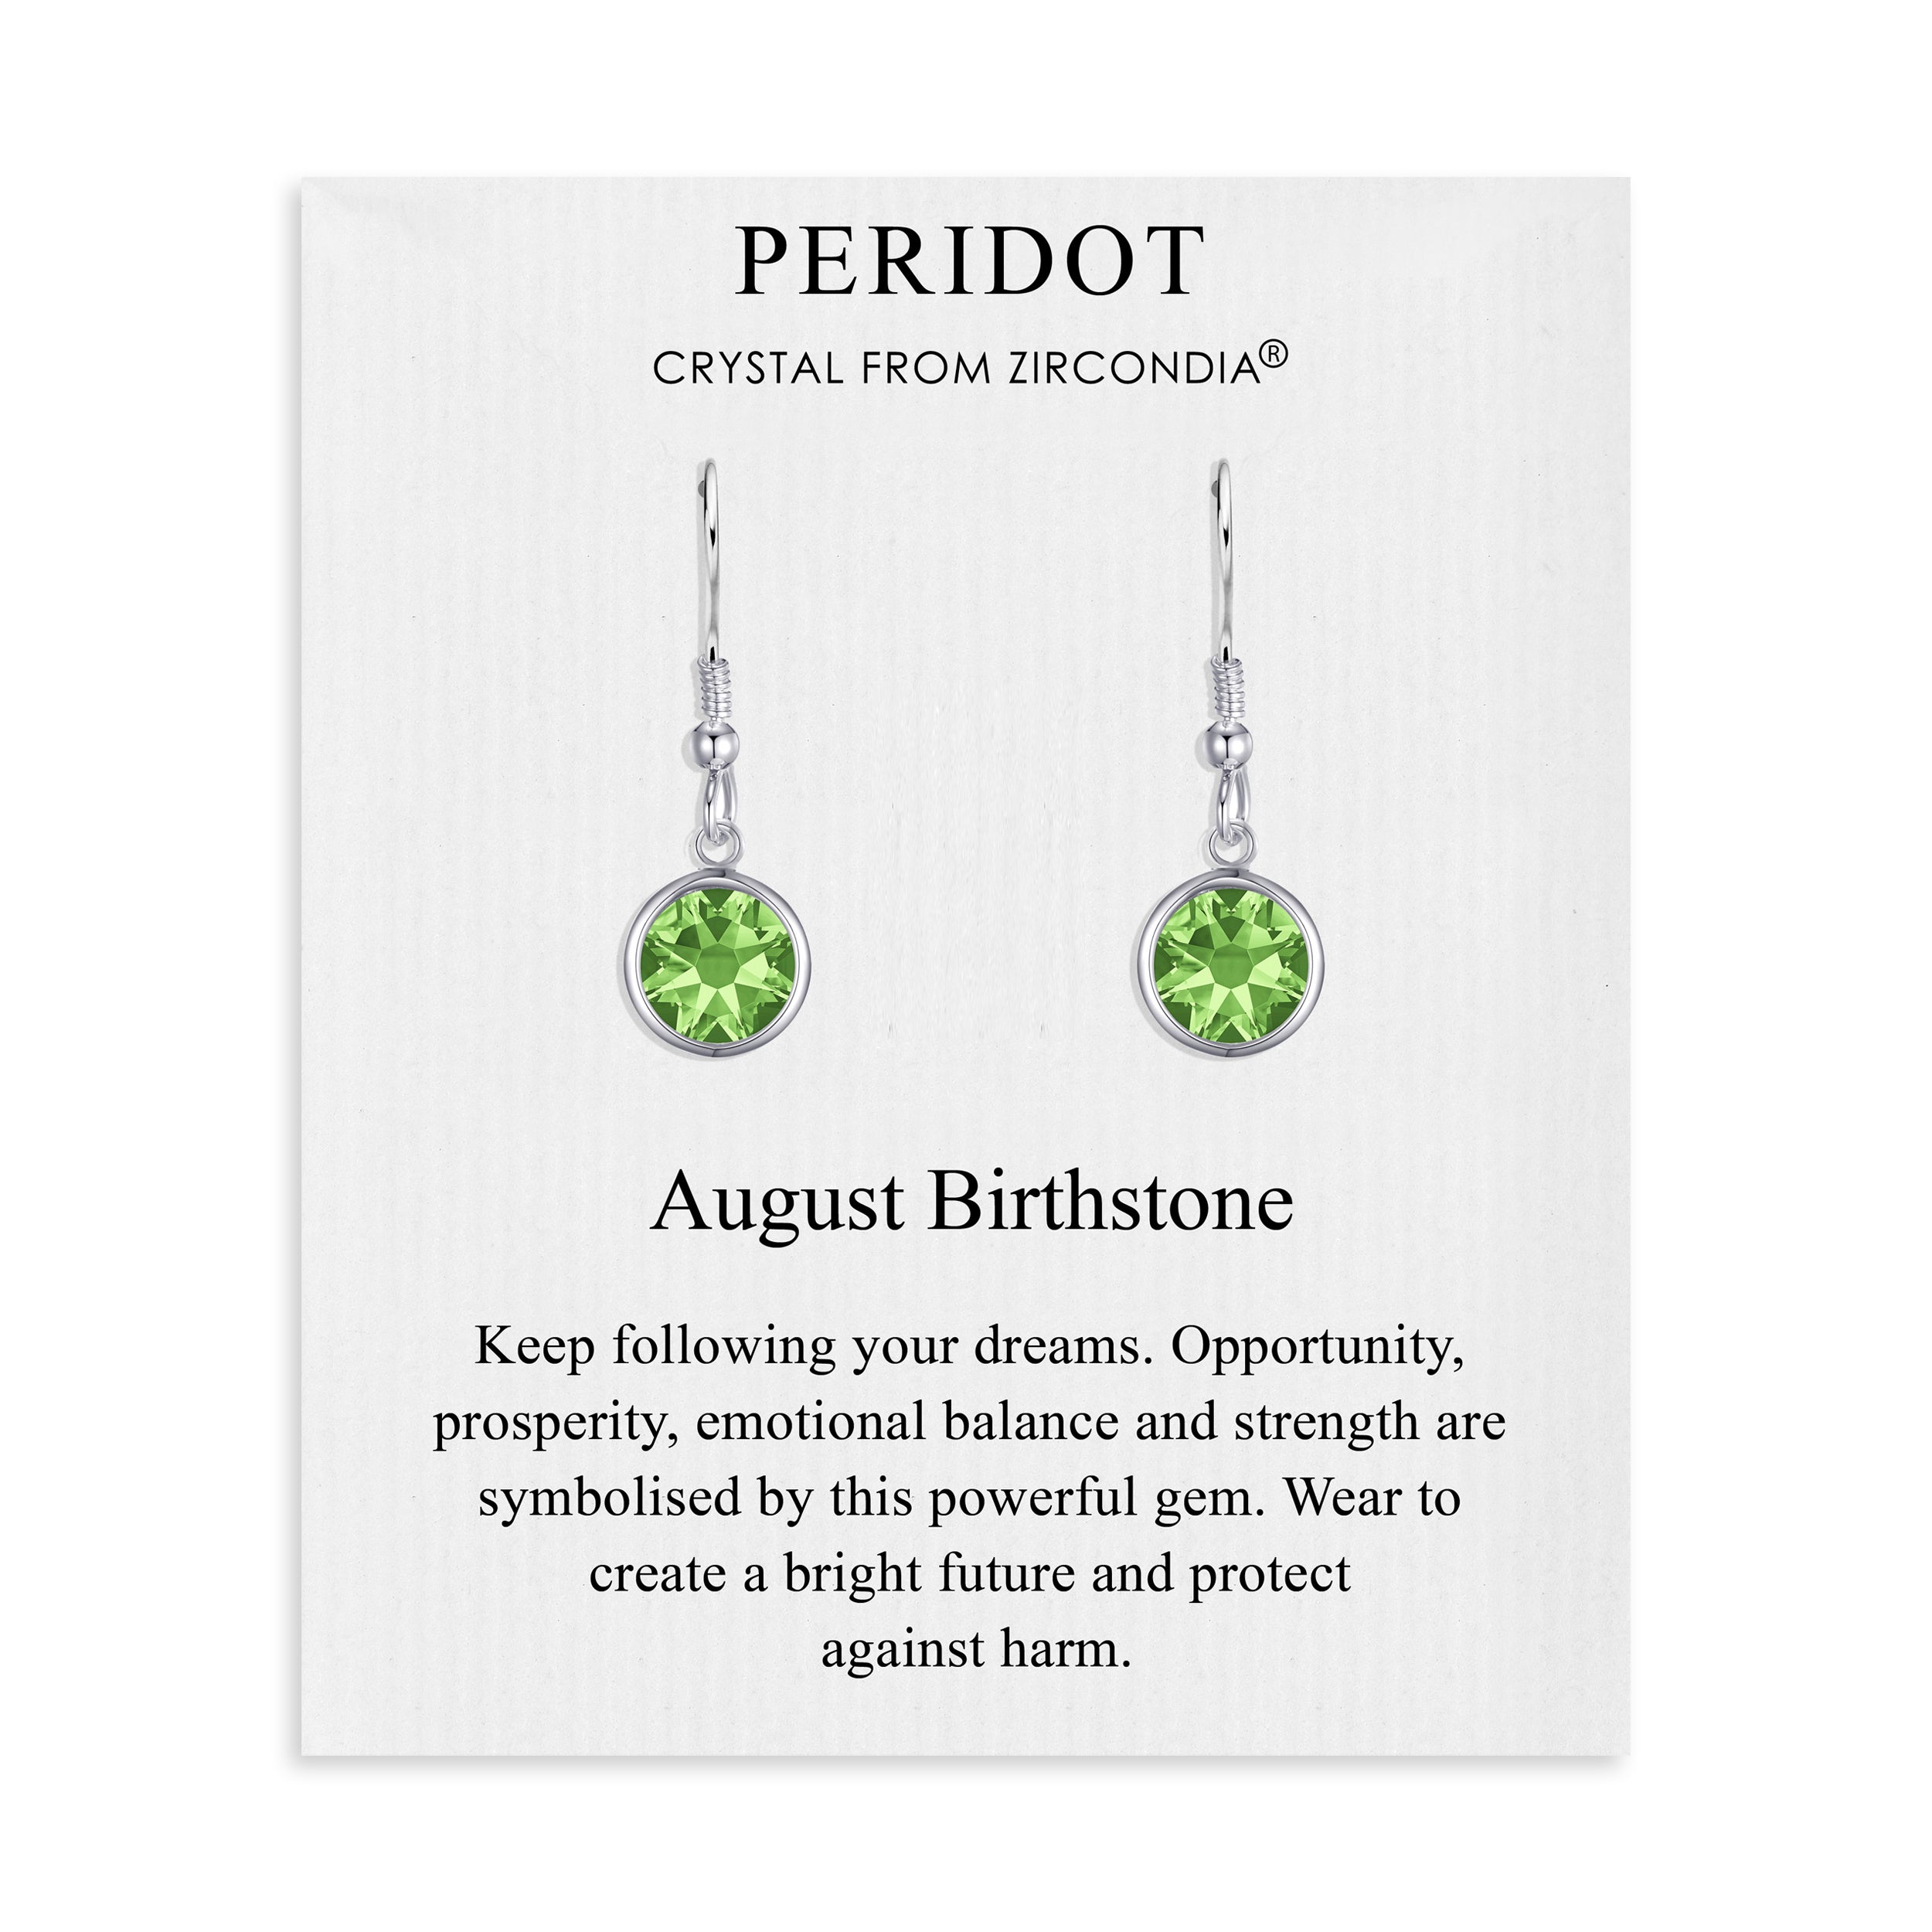 August Birthstone Drop Earrings Created with Peridot Zircondia® Crystals by Philip Jones Jewellery